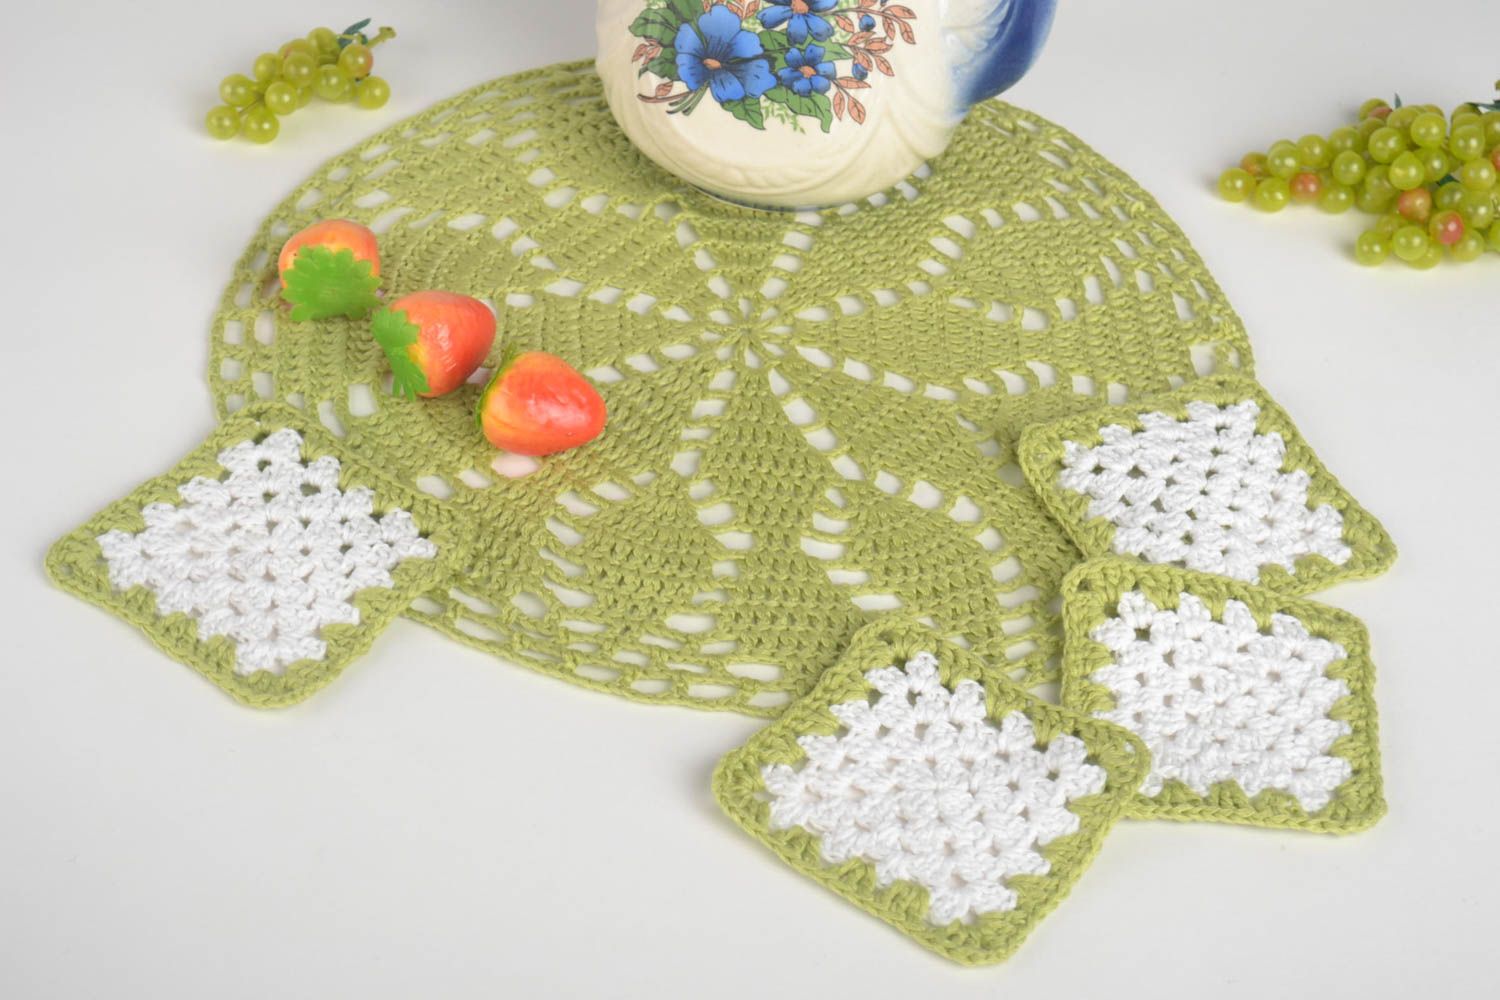 Handmade crochet napkin crochat coaster 4 hot pads crochet ideas home textiles photo 1